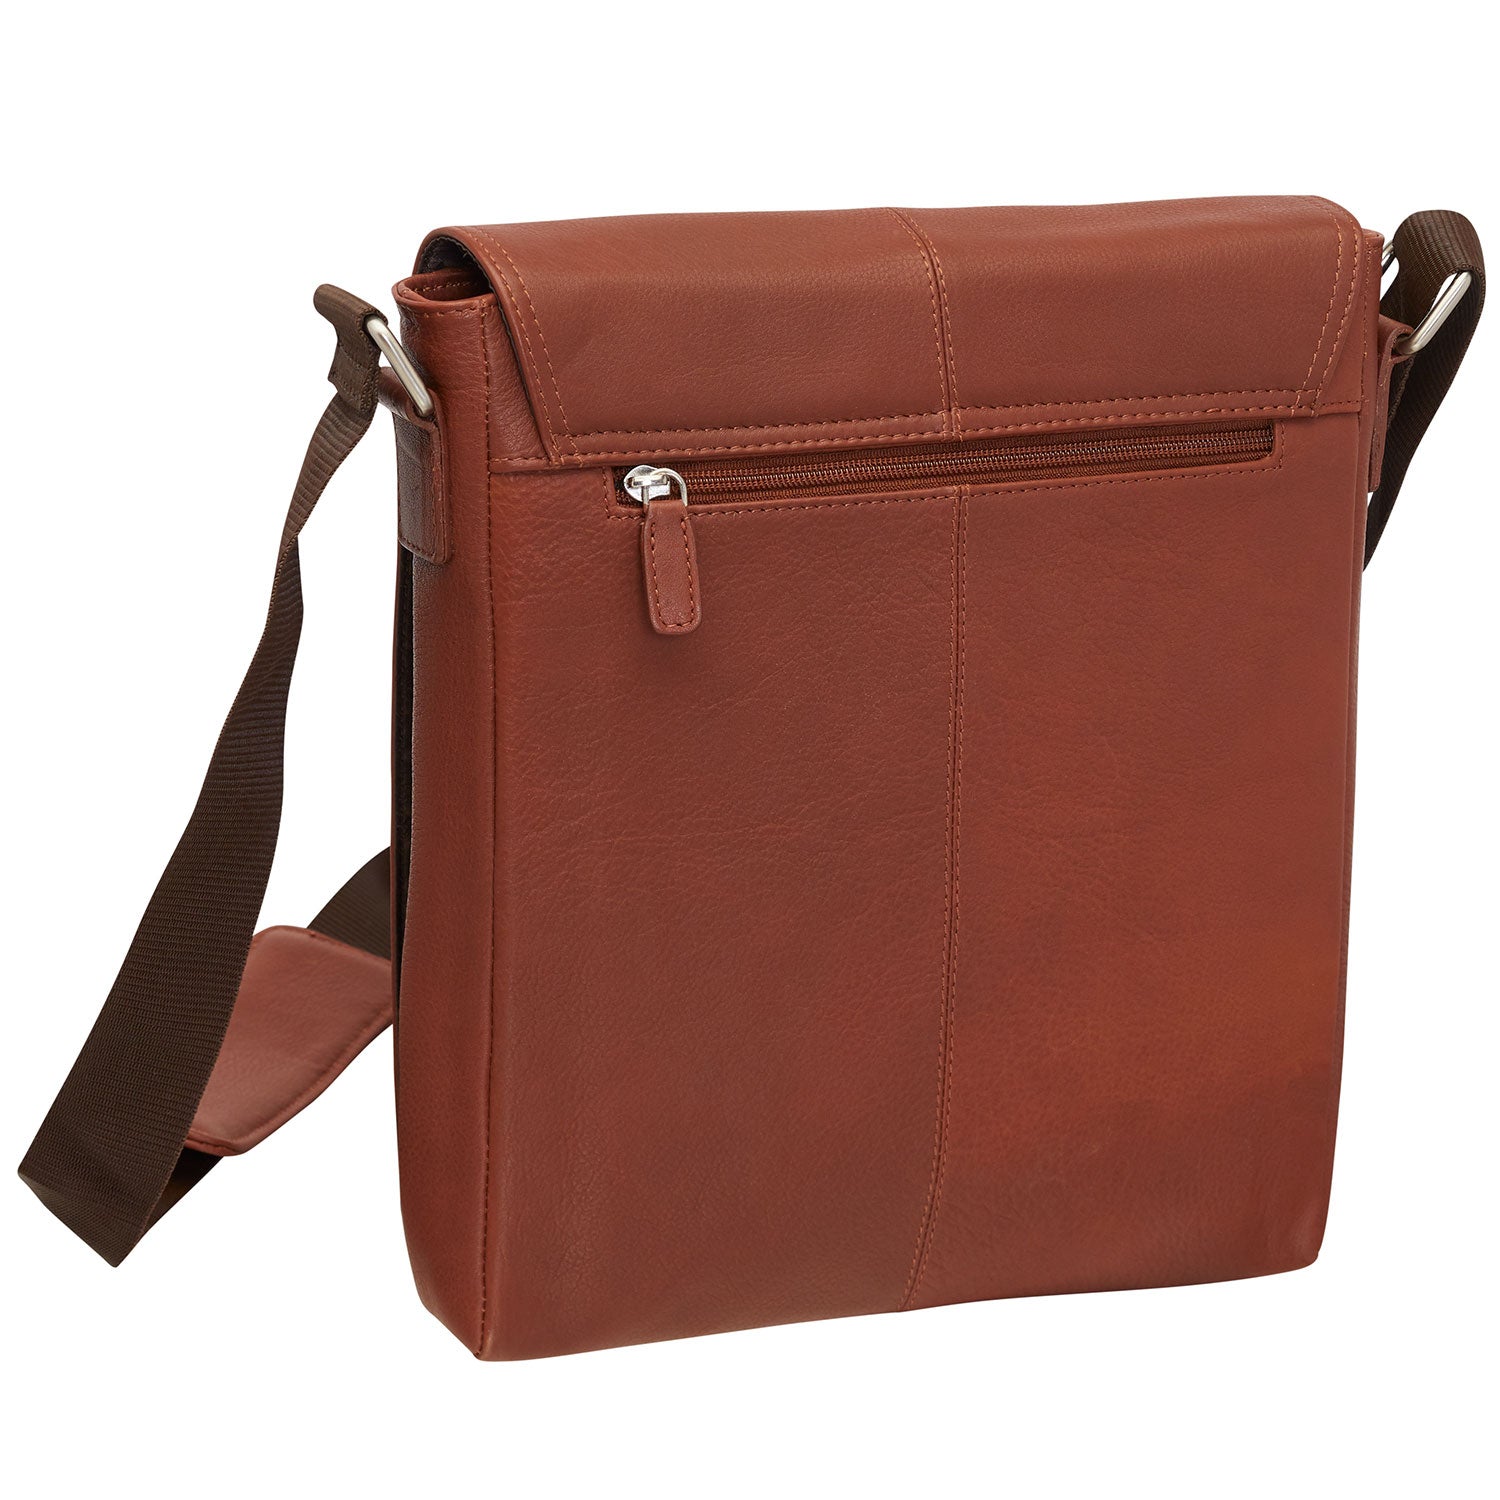 Mancini Leather Messenger Style Unisex Bag for Tablet/ E-reader, 10.25" x 3" x 12", Cognac